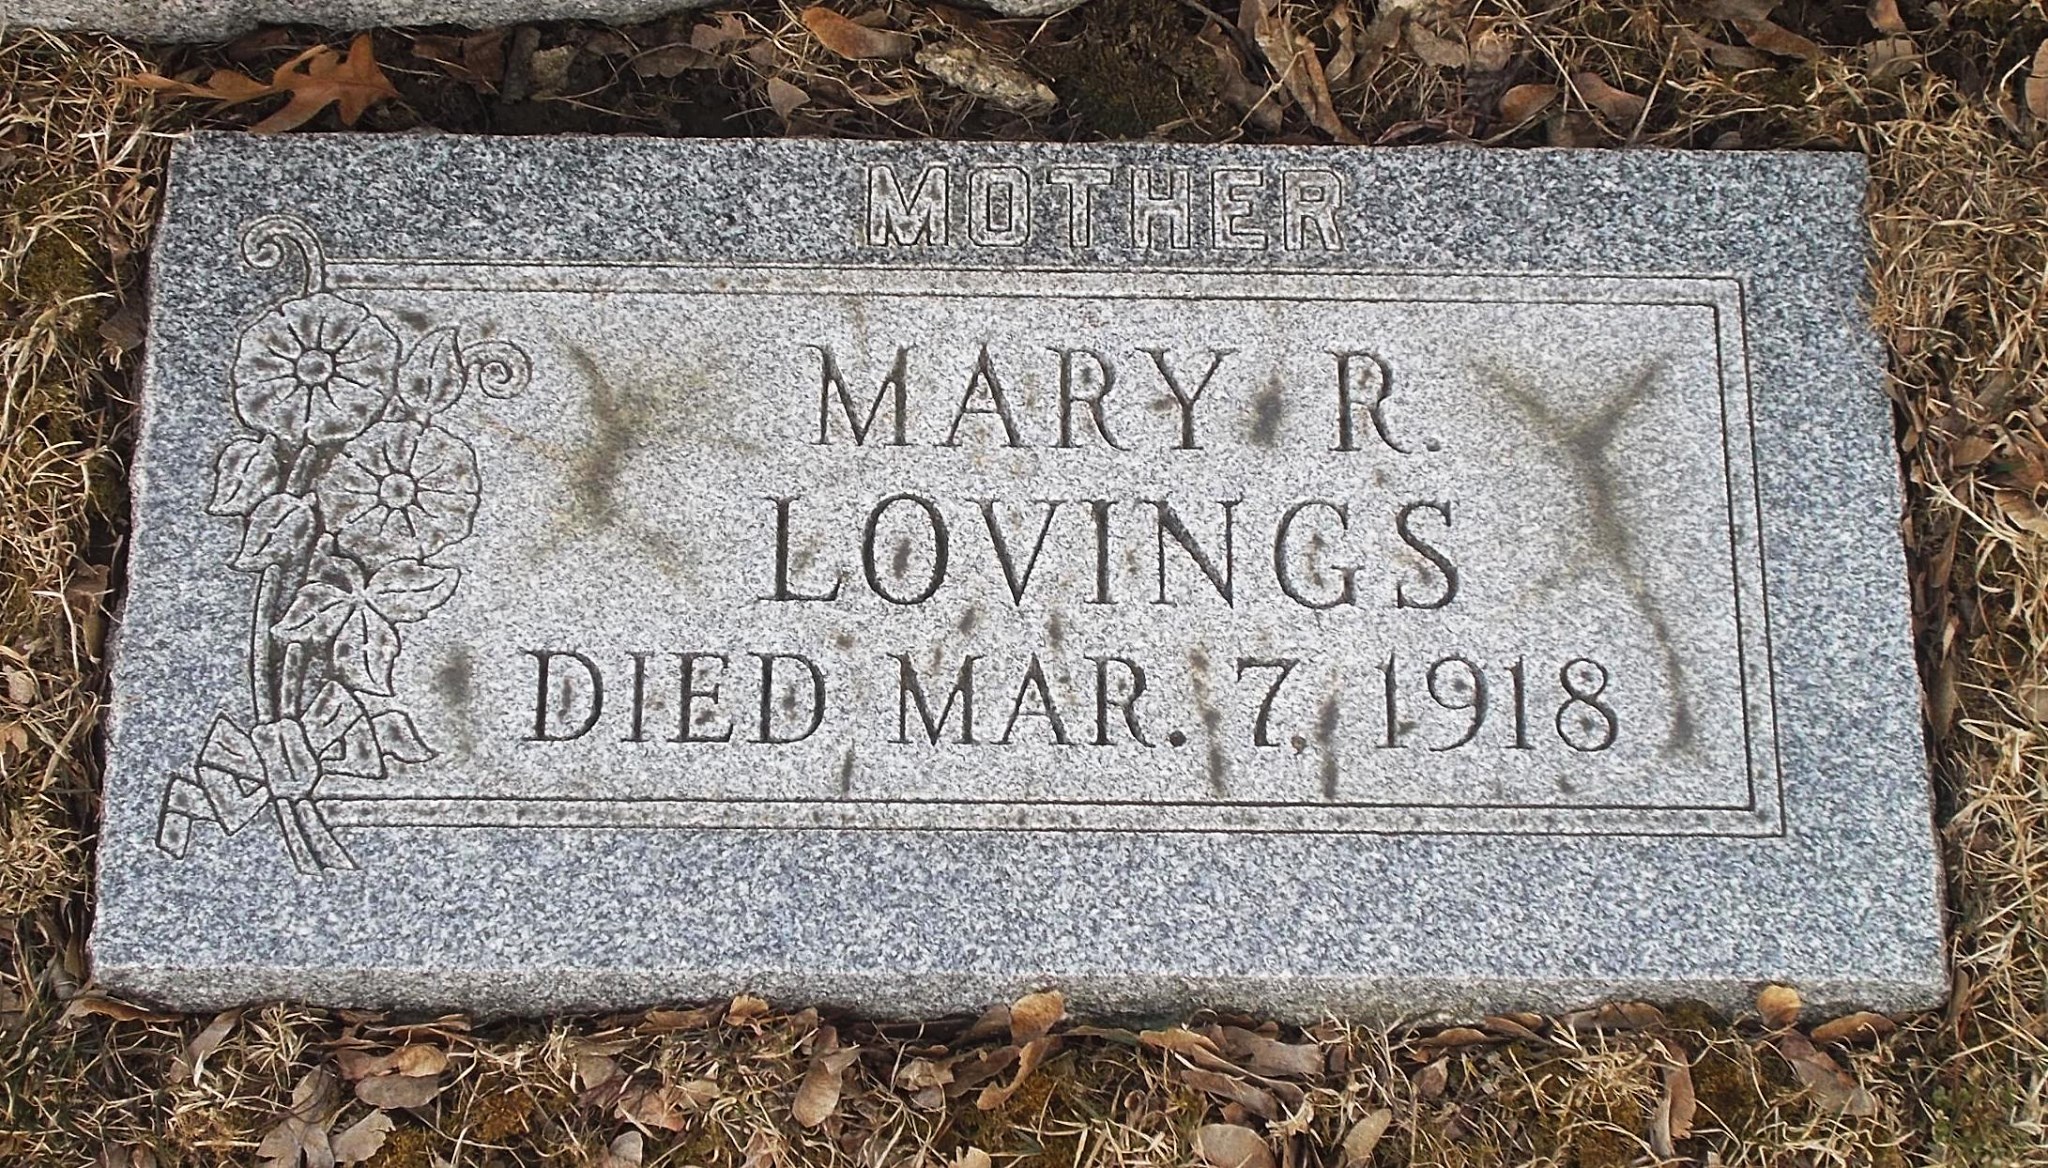 Mary R Lovings